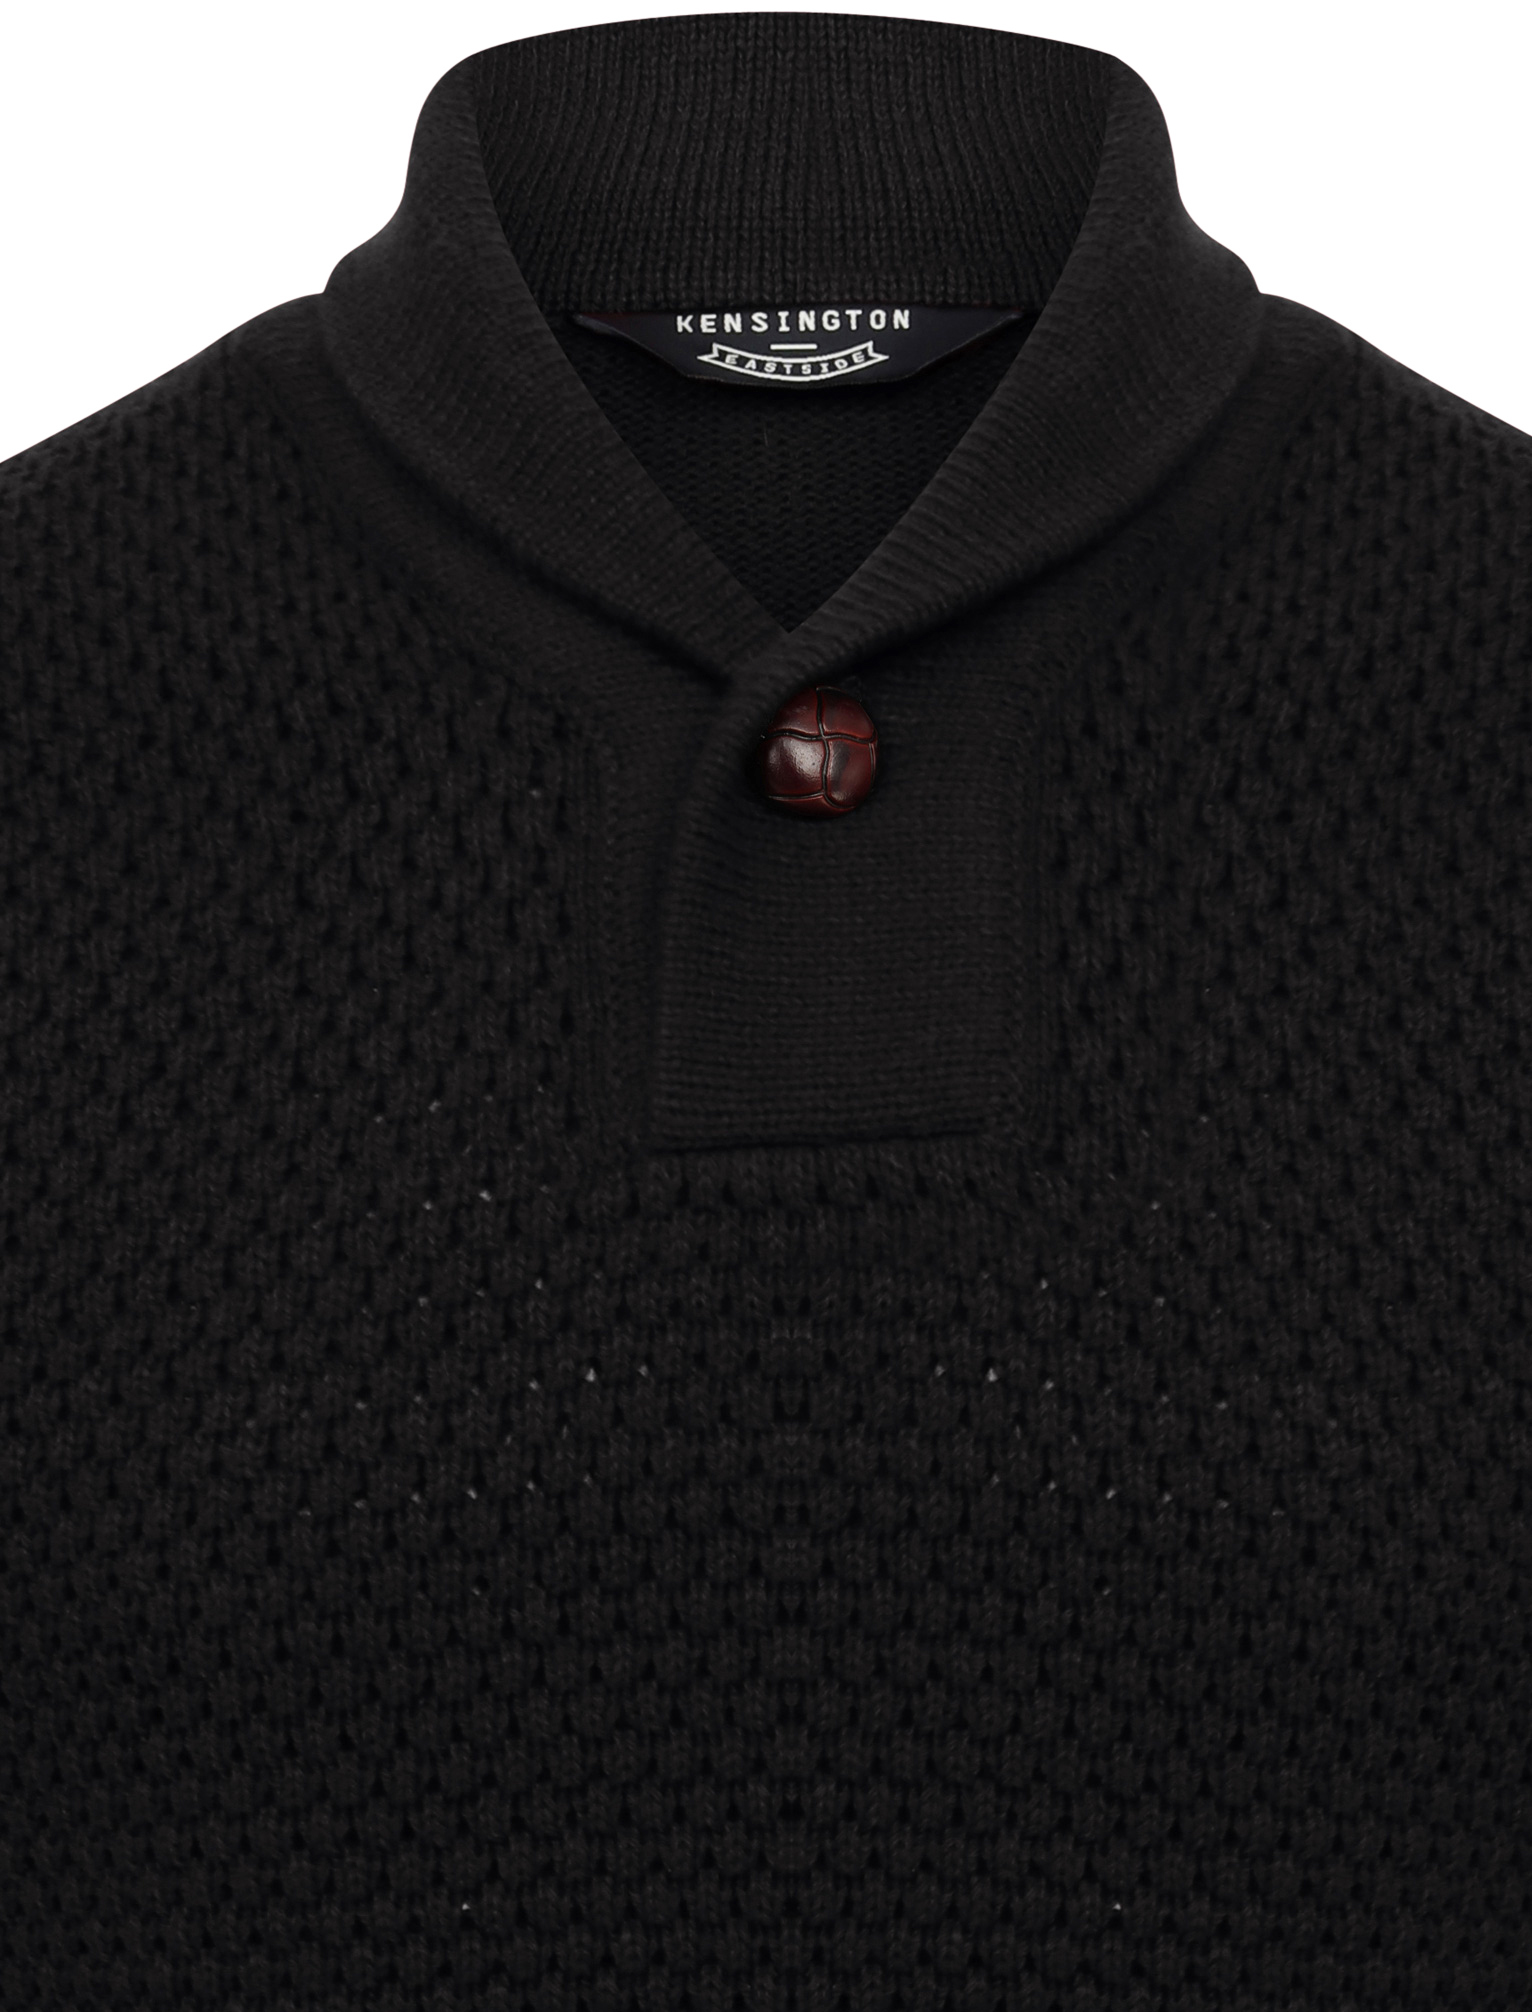 Kensington Eastside Men's Wool Mix Merrion Jumper Knitted Shawl Neck Sweater Top